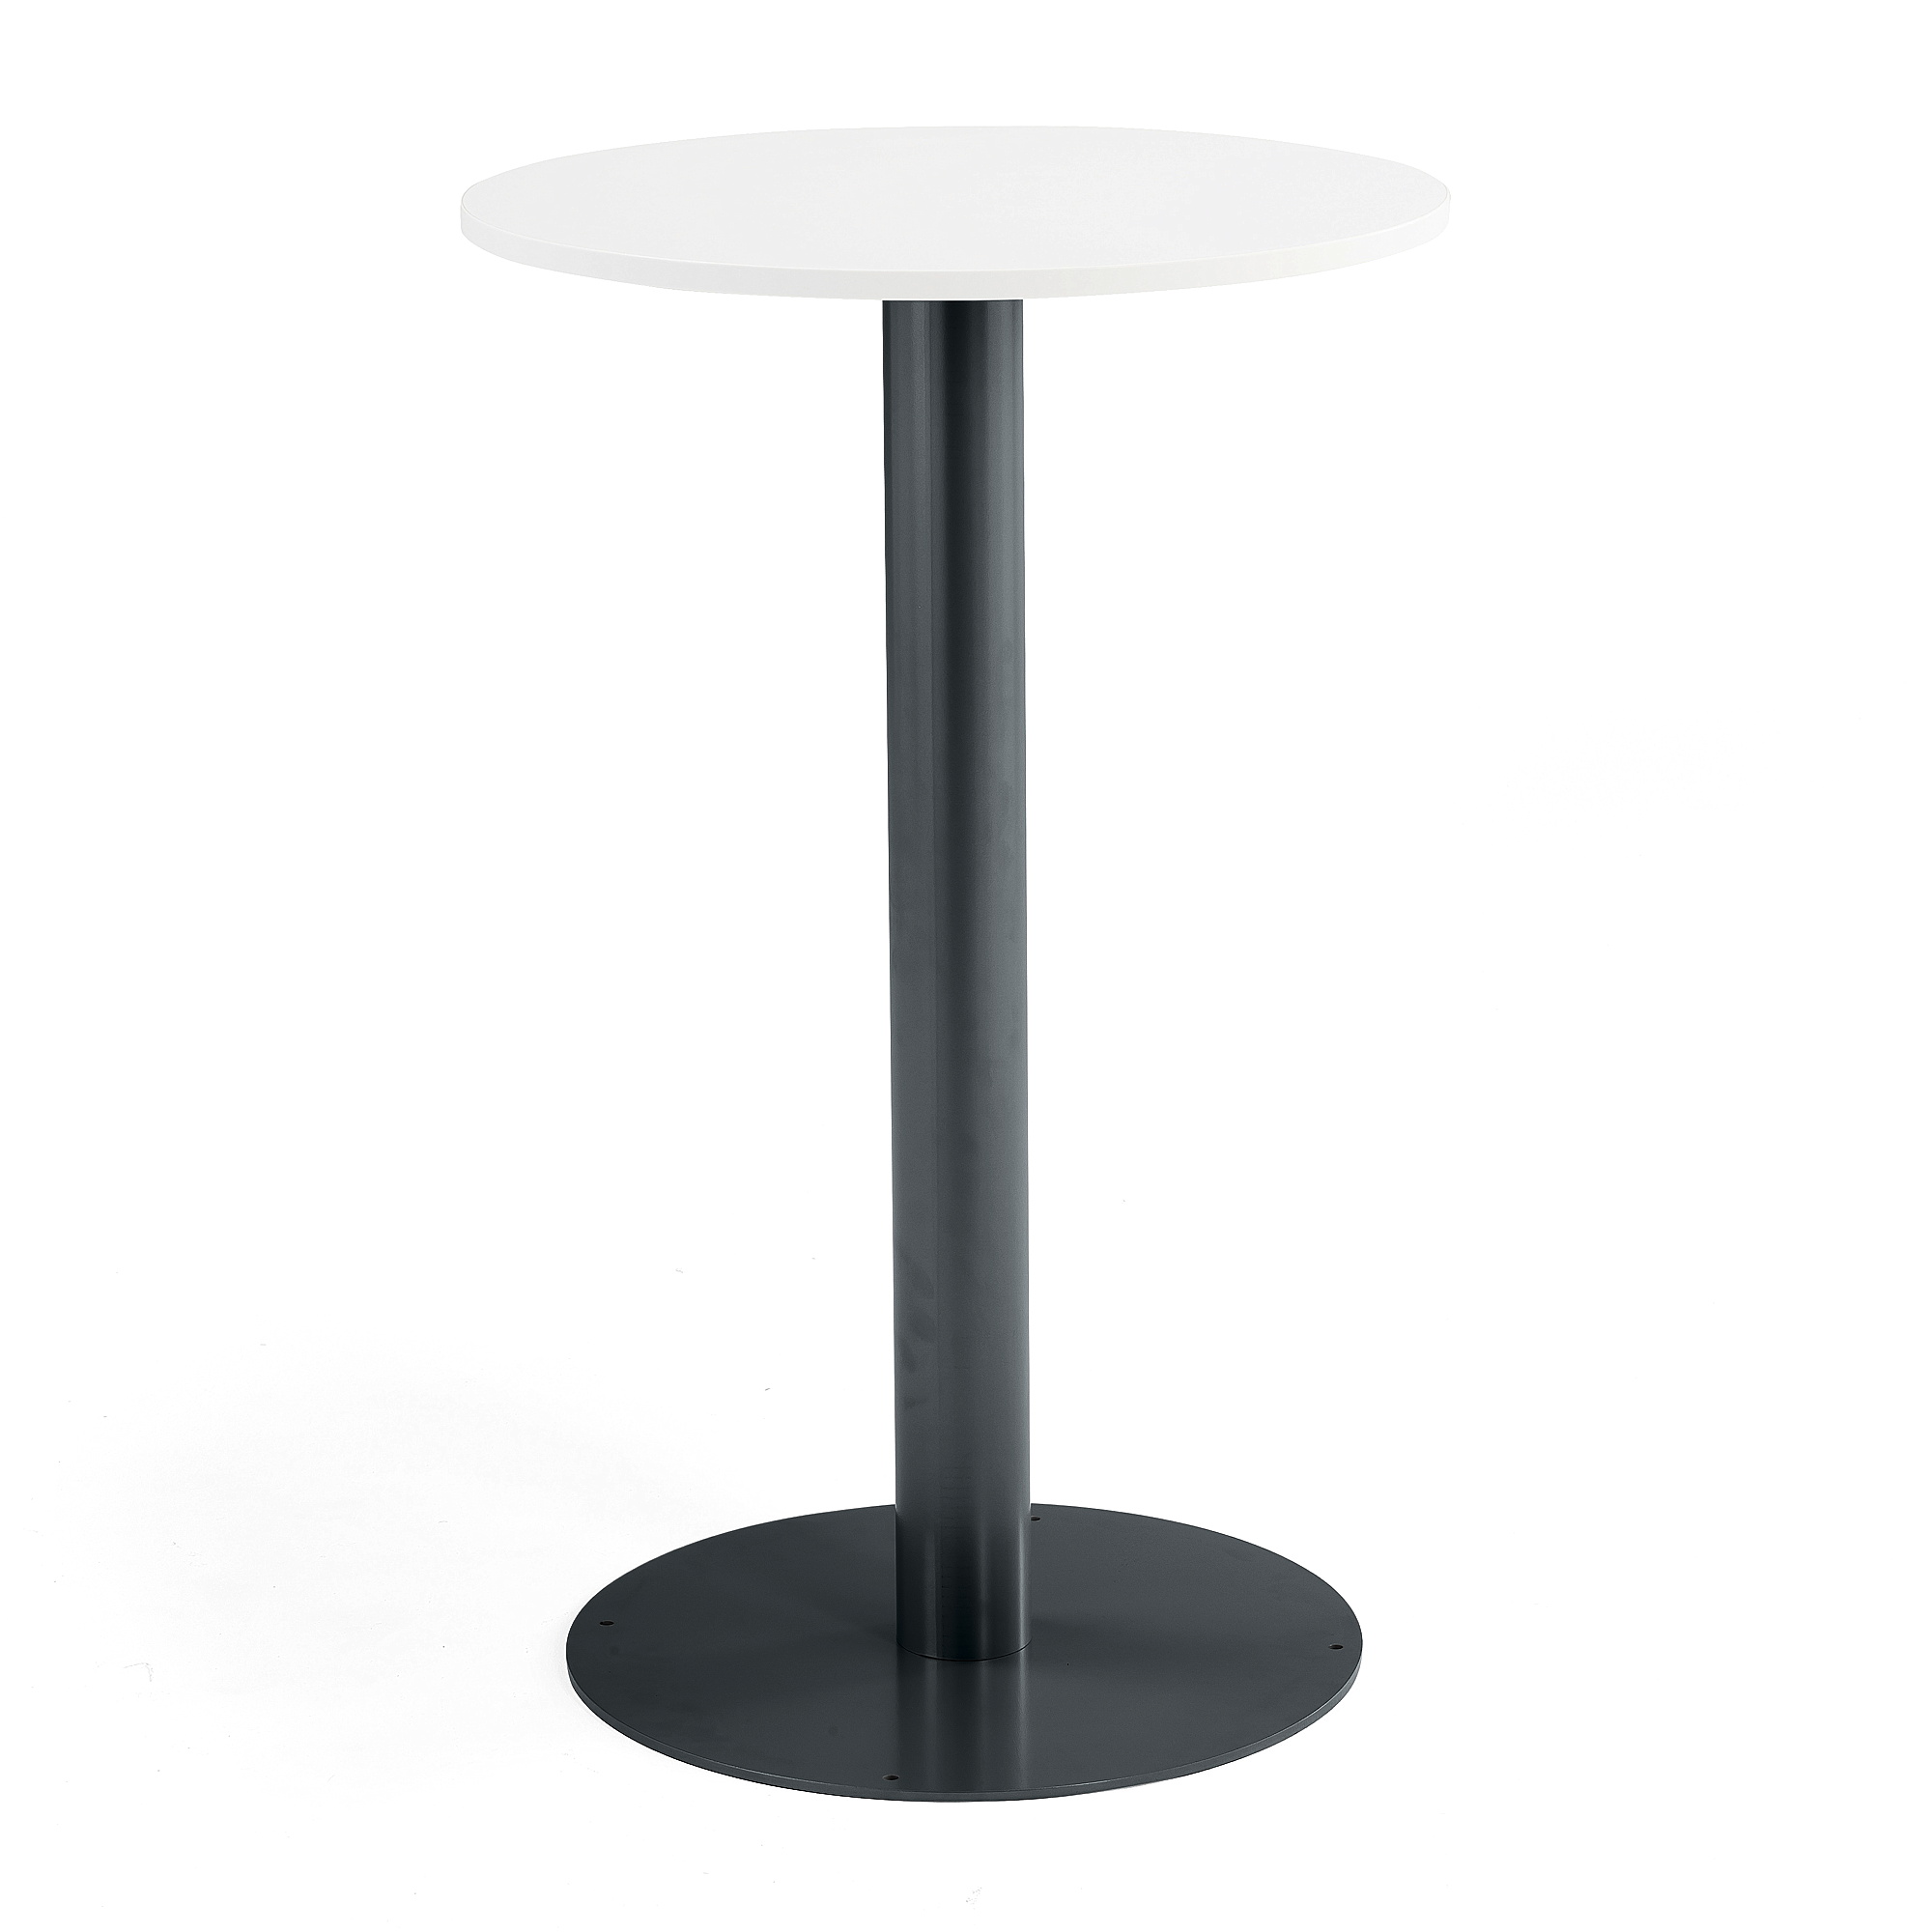 Kulatý stůl Alva, Ø700x1100 mm, bílá, antracitově šedá